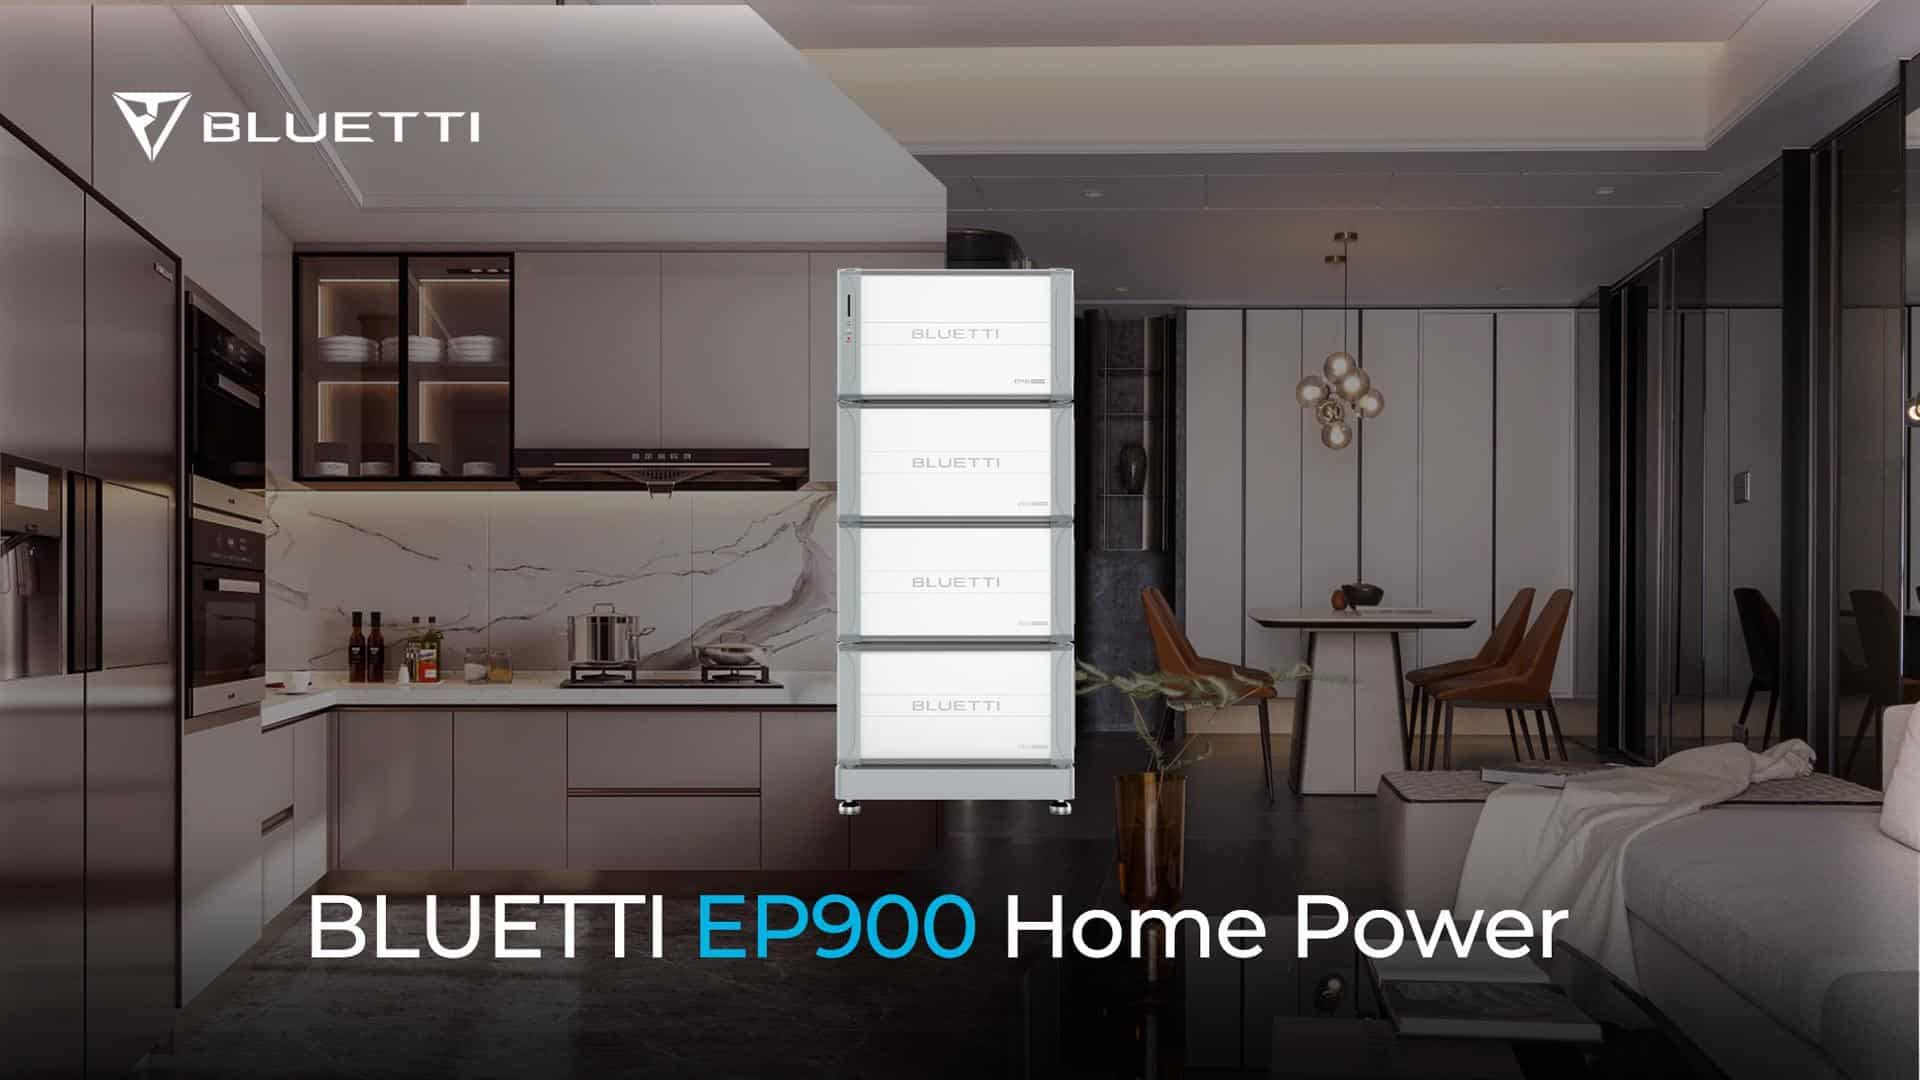 Bluetti EP900 Home Power Article Image 1